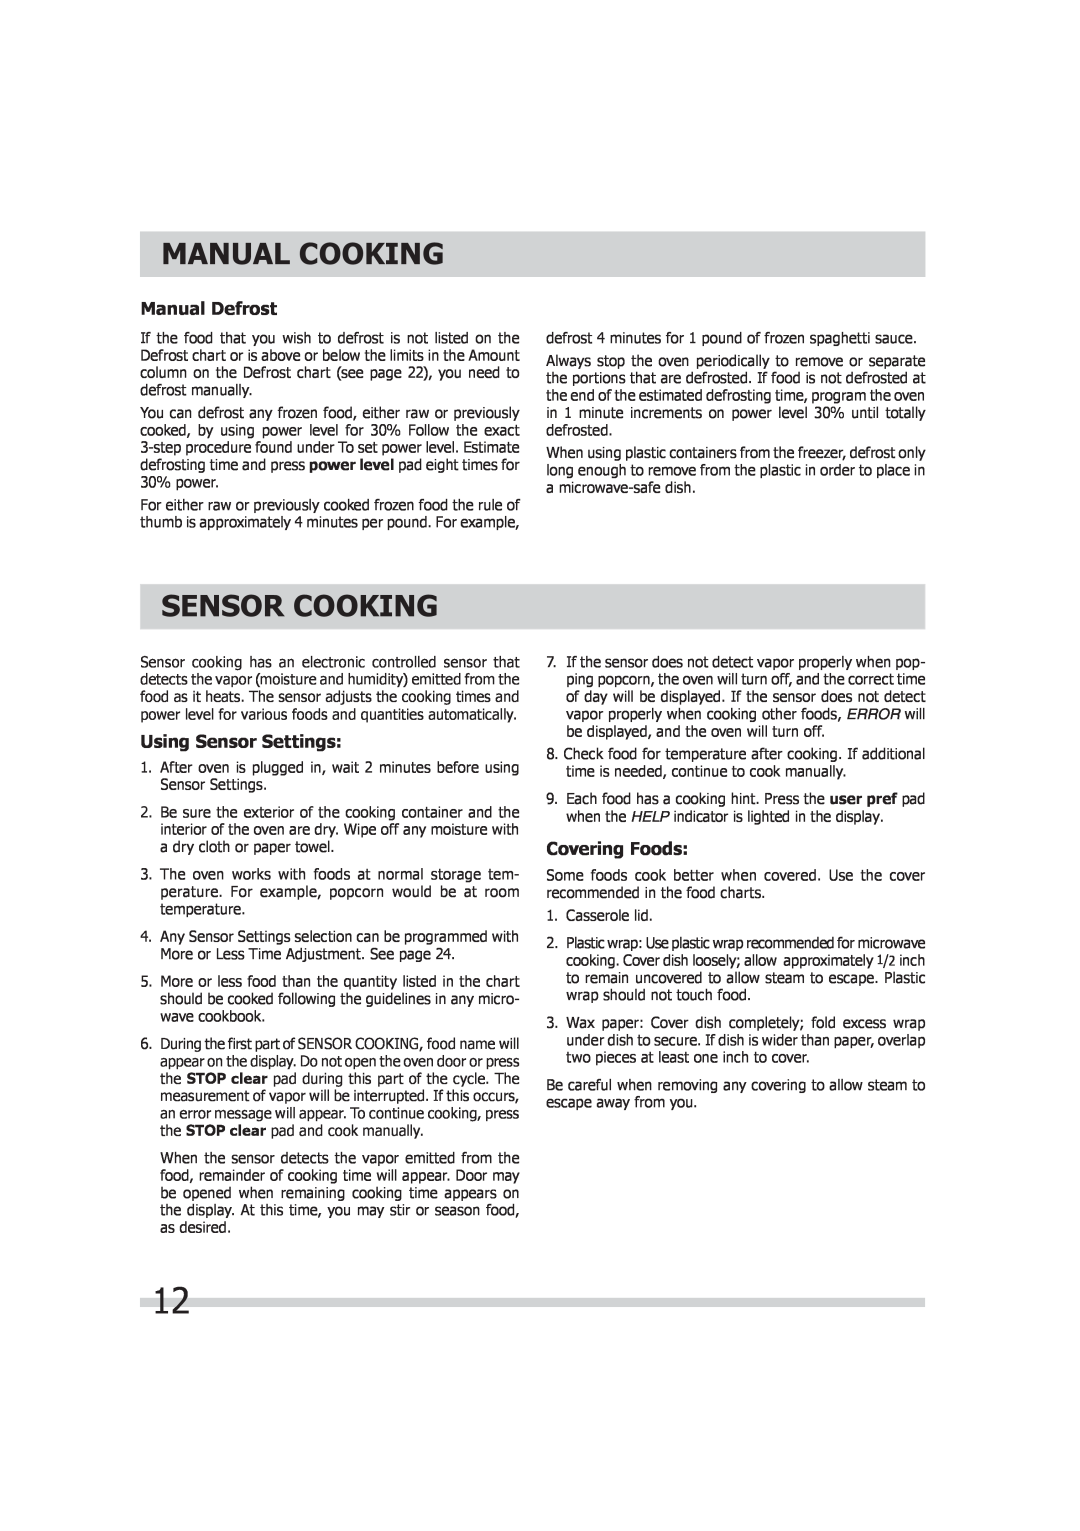 Frigidaire 316495055 Sensor Cooking, Manual Defrost, Using Sensor Settings, Covering Foods, Manual Cooking 